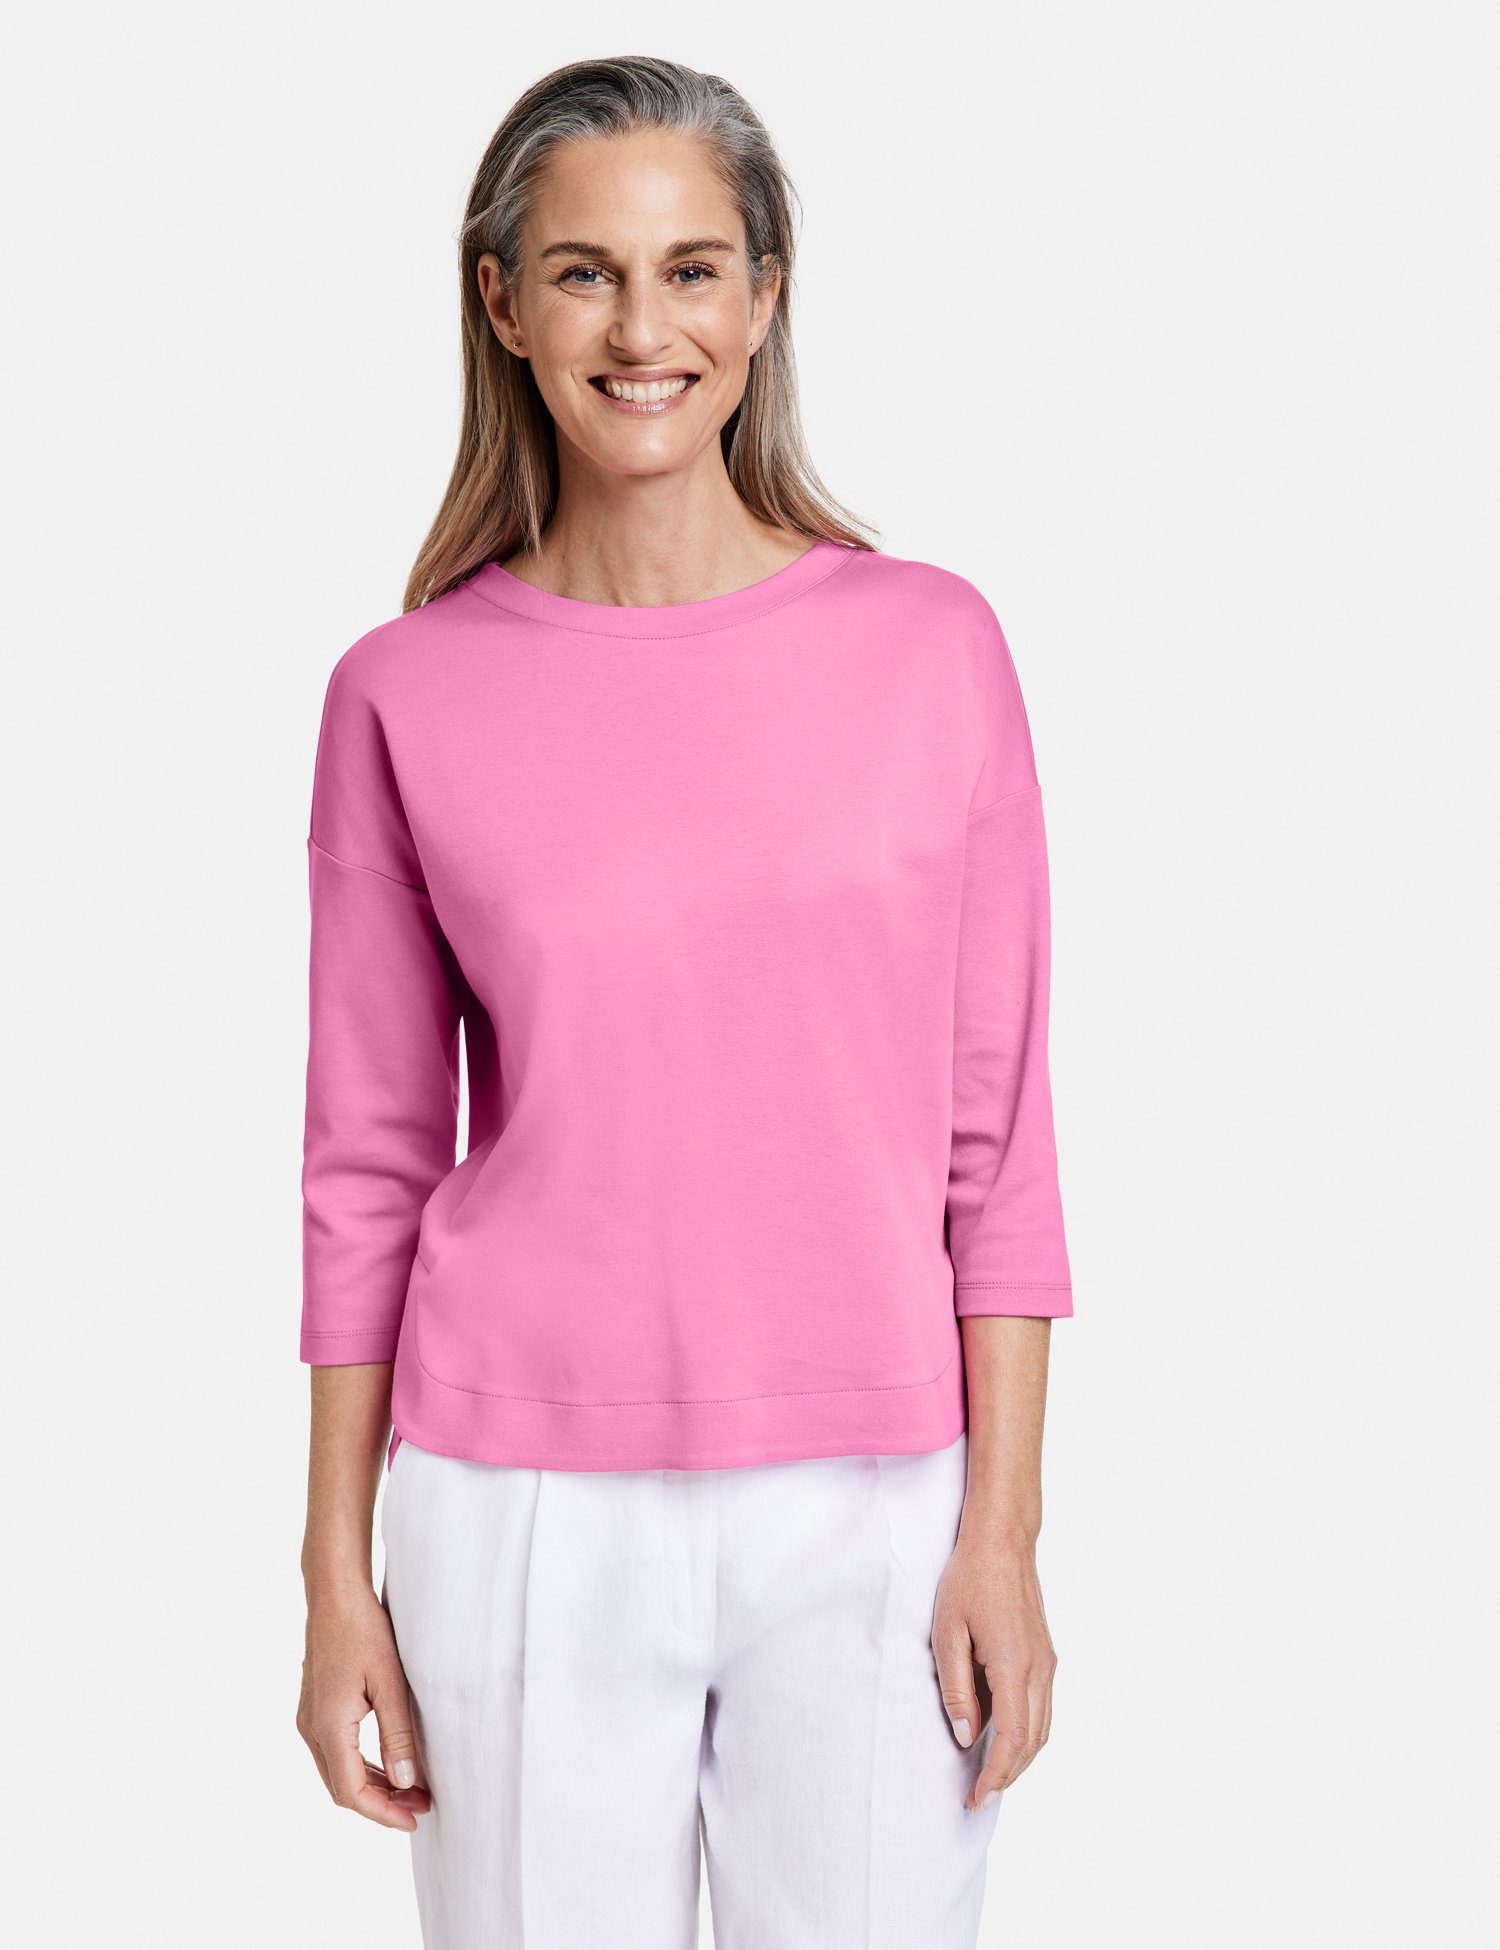 Pink Baumwolle GERRY 3/4-Arm-Shirt aus 3/4-Arm-Shirt reiner WEBER Soft